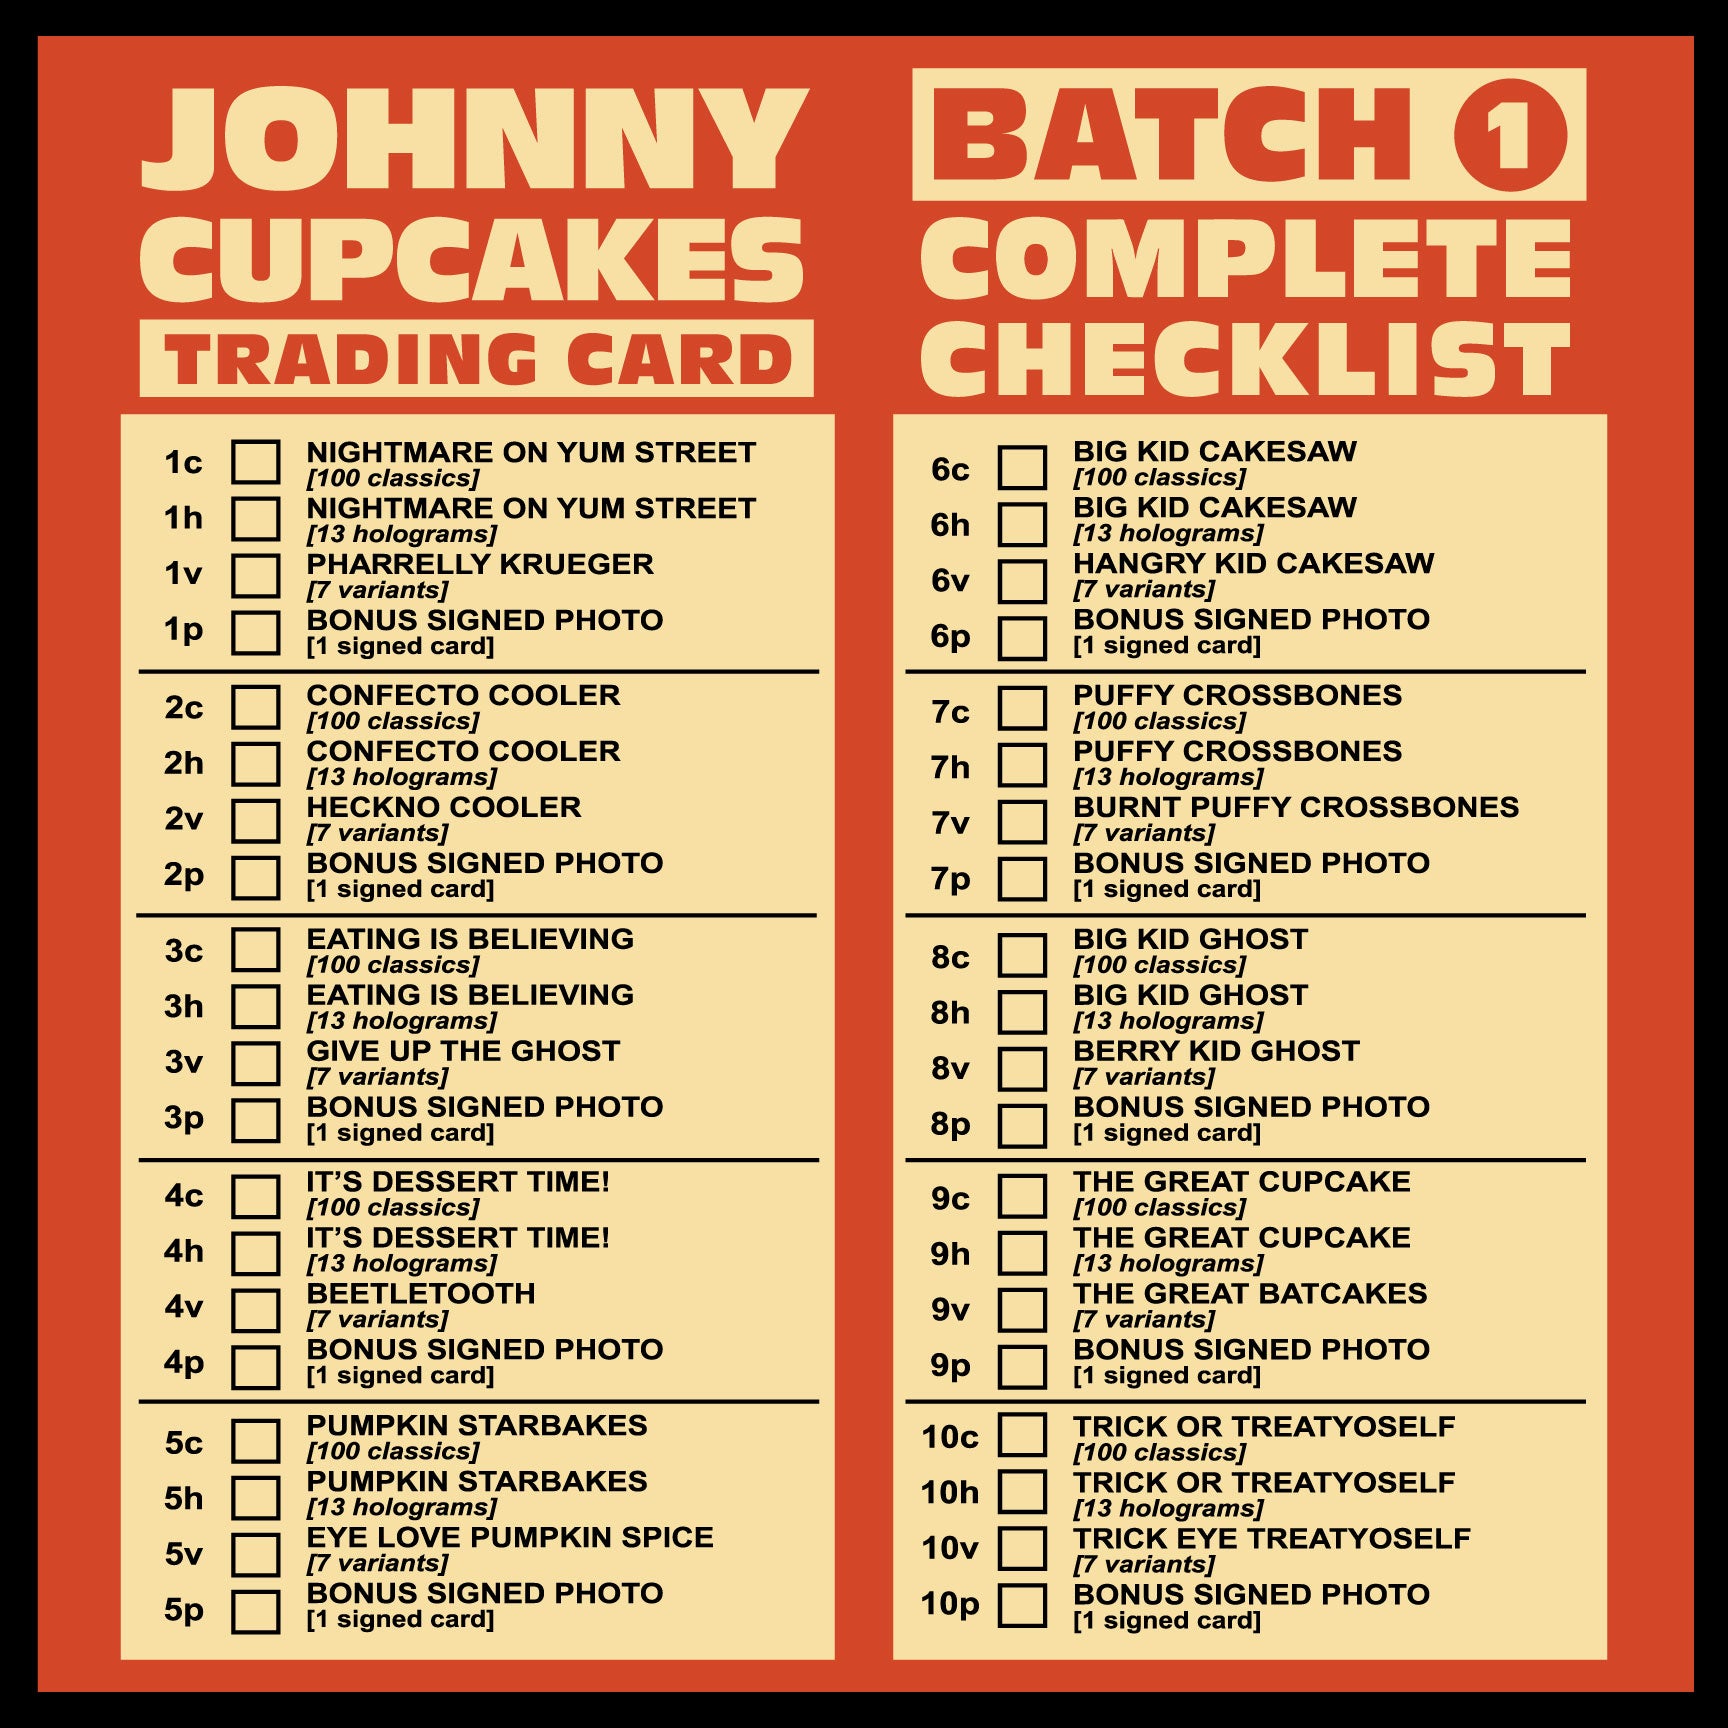 JC Trading Card (Batch 1) - 20 Pack